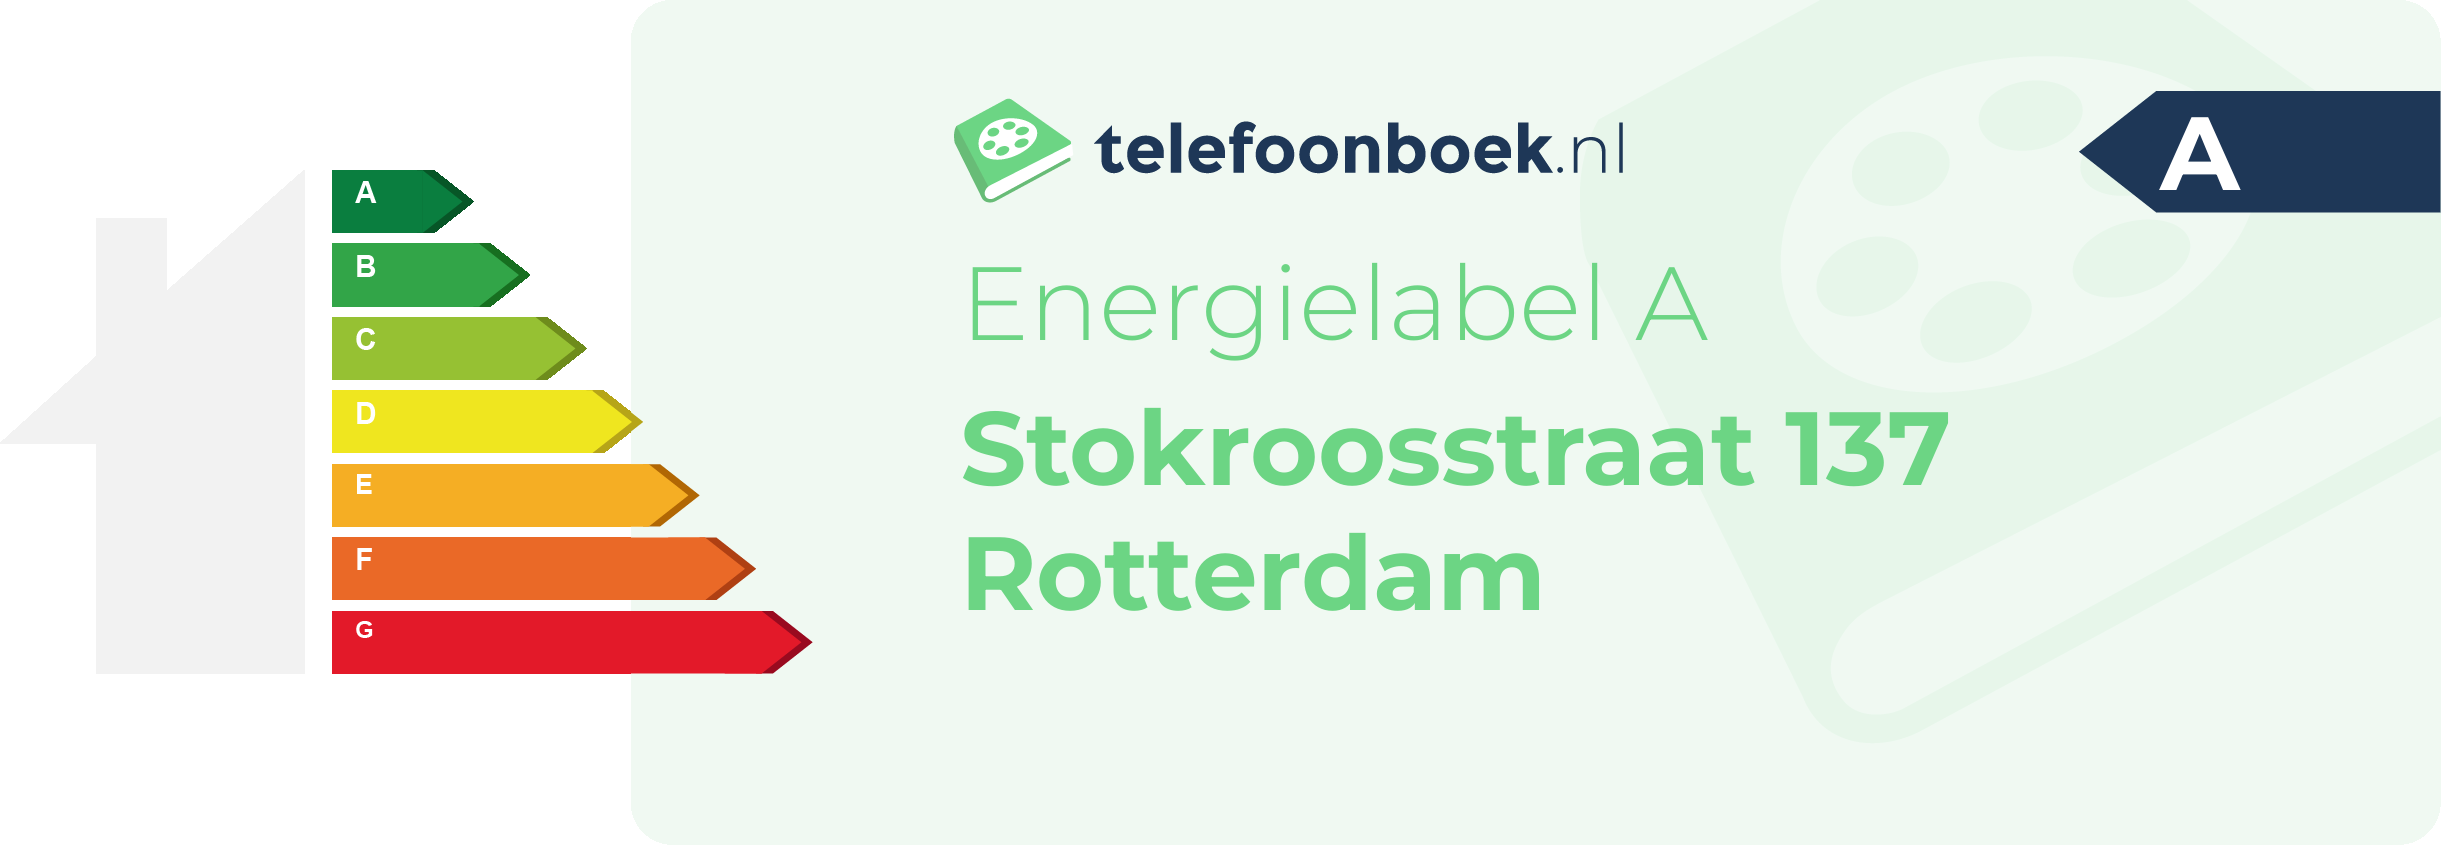 Energielabel Stokroosstraat 137 Rotterdam